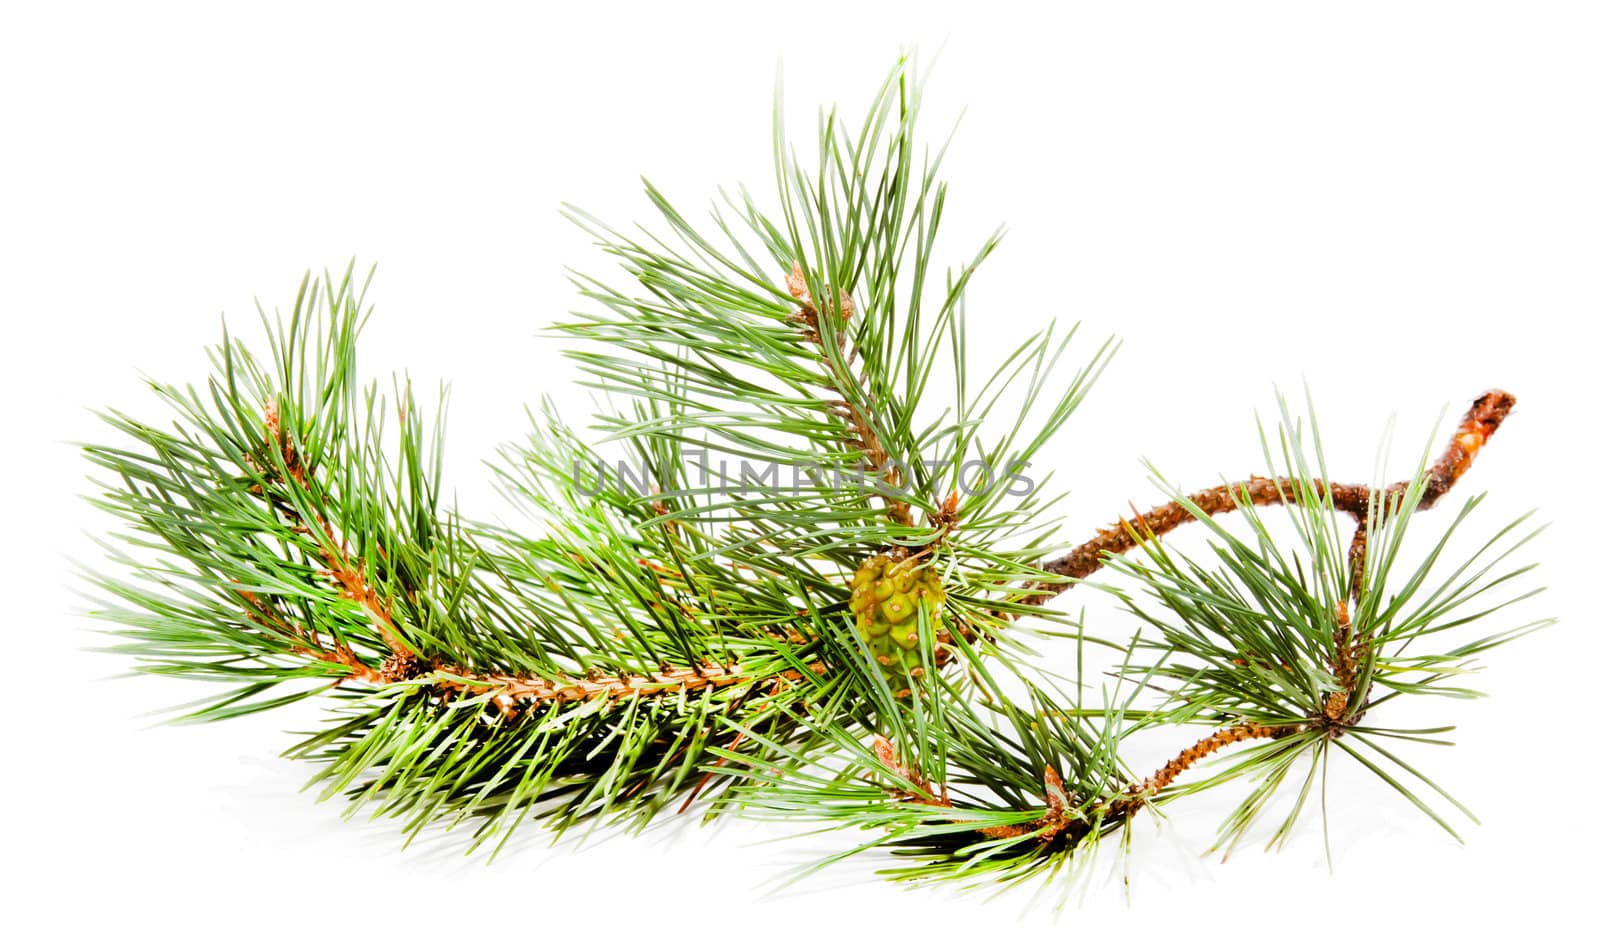 Green fir branch with fir cone by RawGroup